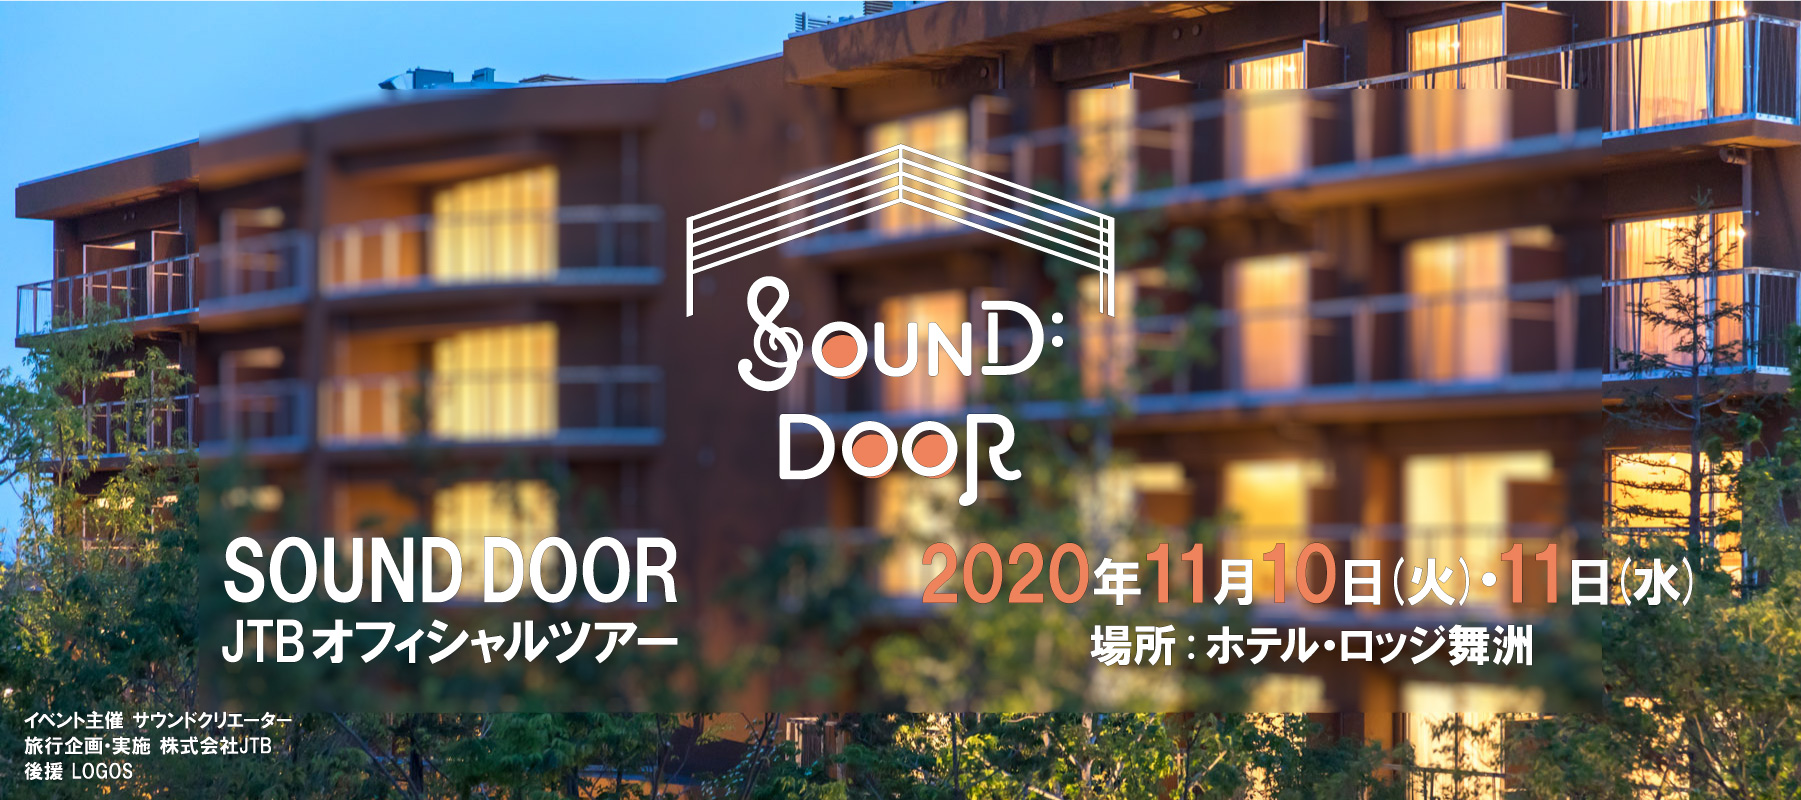  SOUND DOOR  JTBオフィシャルツアー in ホテル・ロッジ舞洲　JTBイベント付きツアー